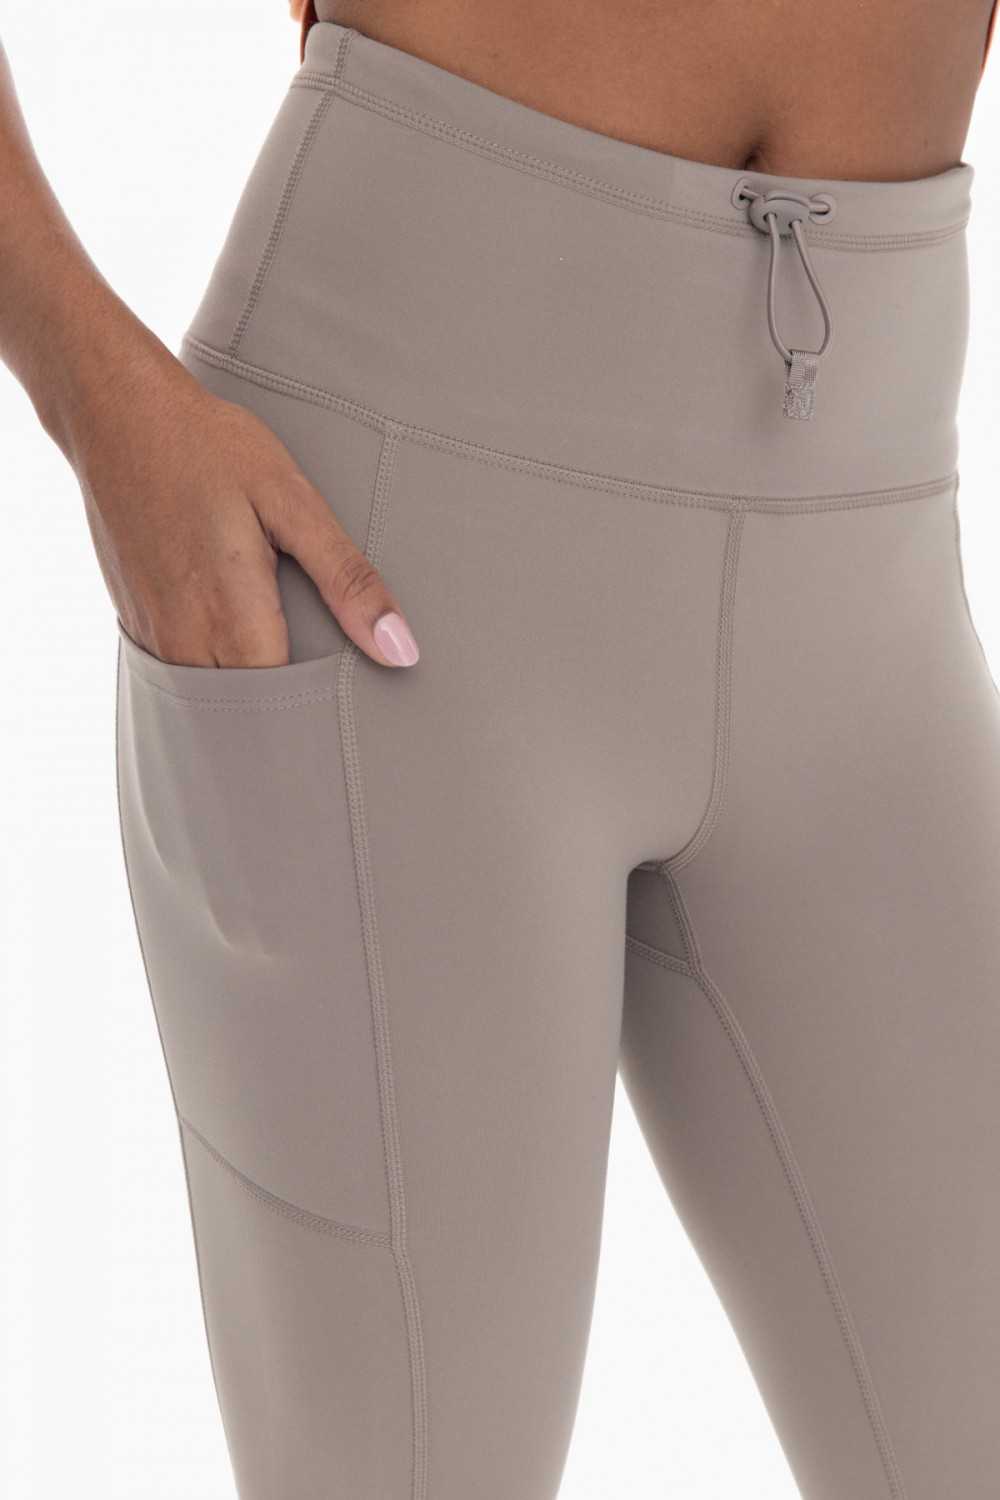 Mono B Leggings Mesh Panels Calf Length Front Waist Pocket Kiwi Green Size  Large